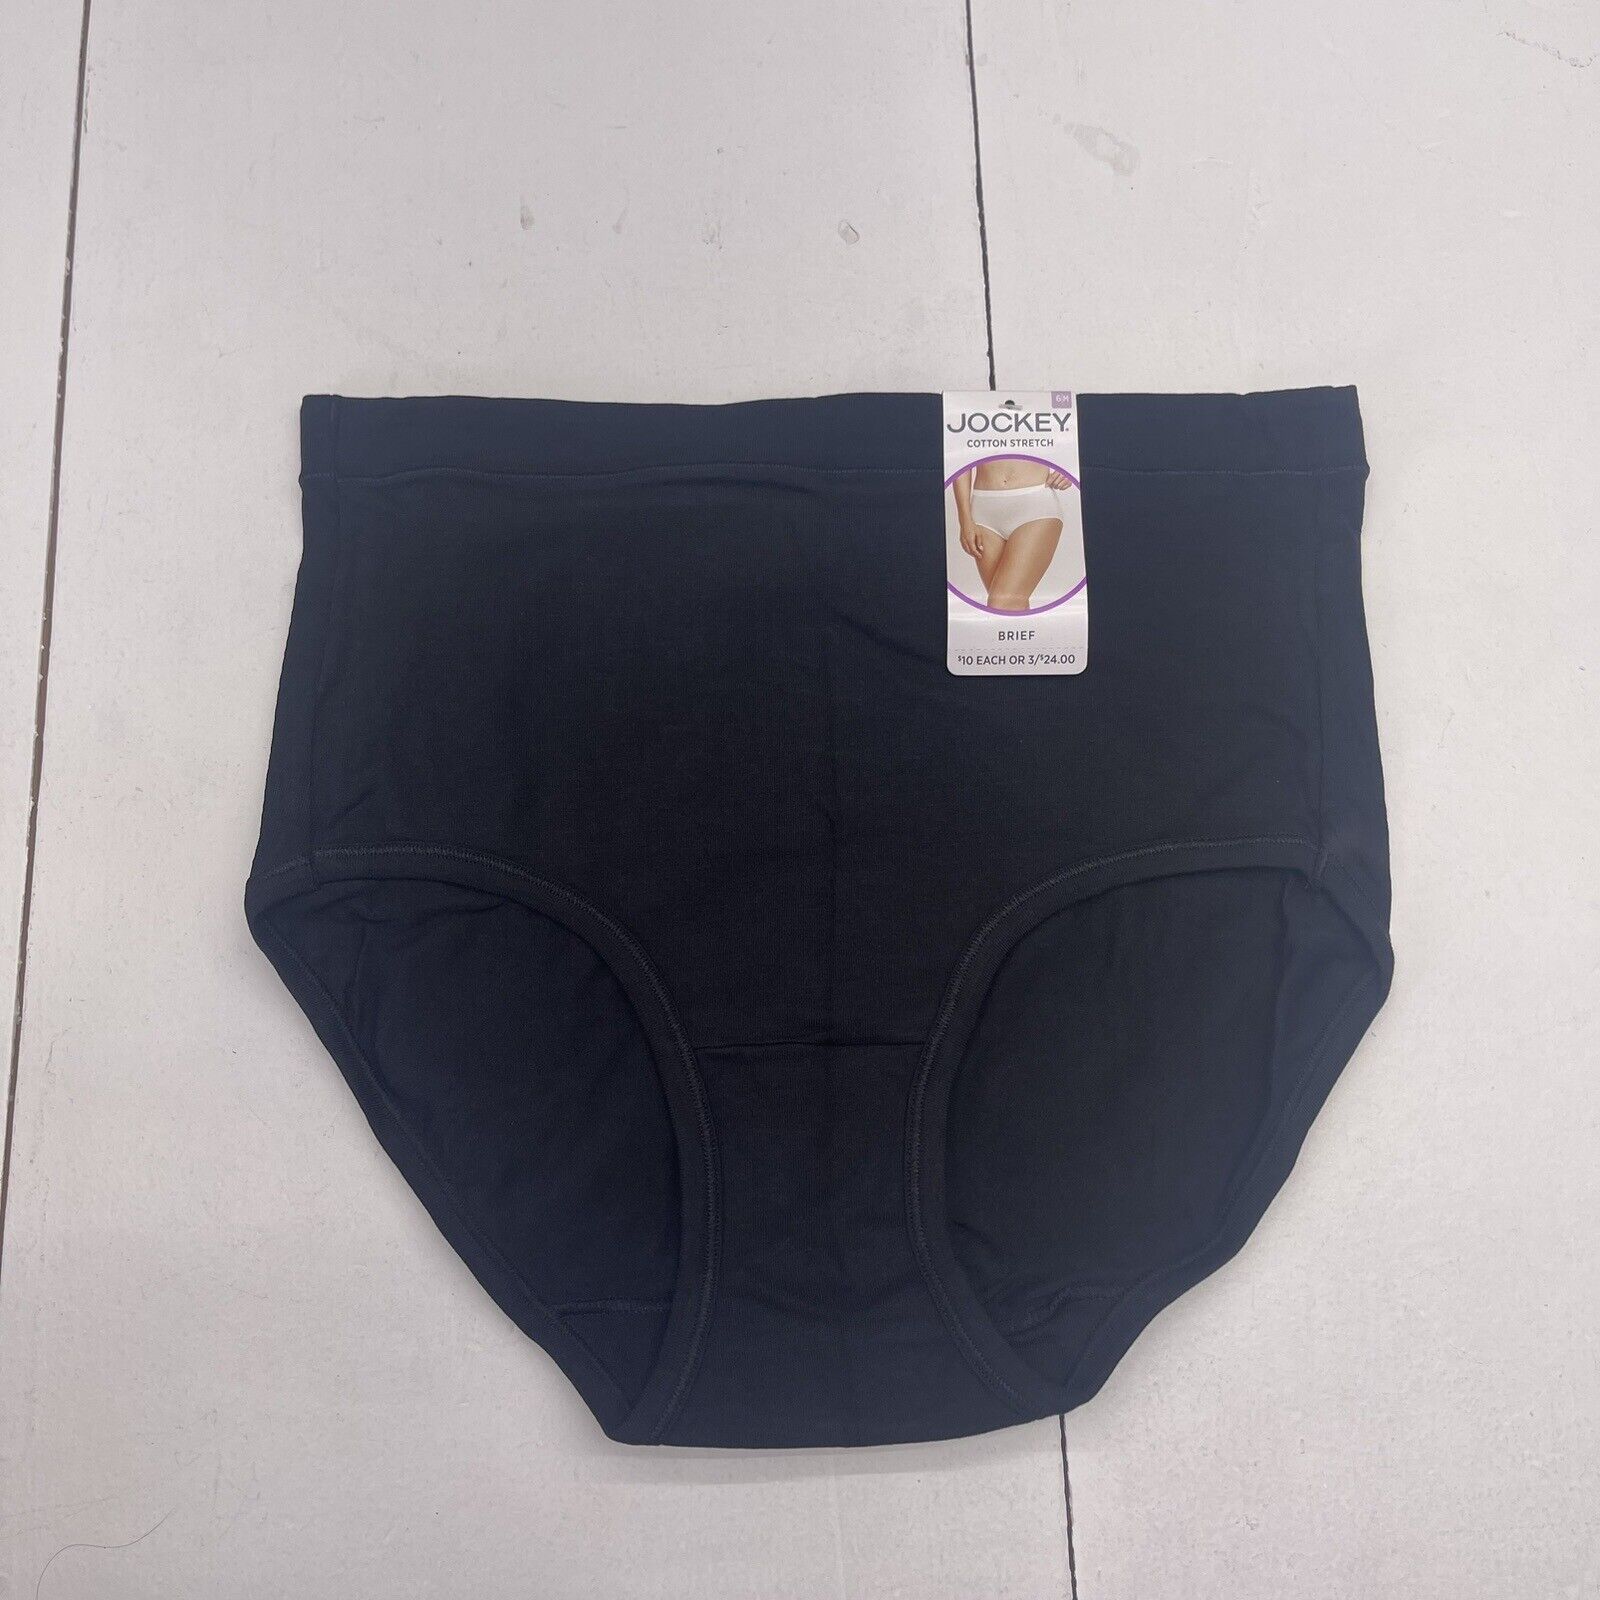 Jockey Black Cotton Stretch Brief Underwear Womens Size Medium New